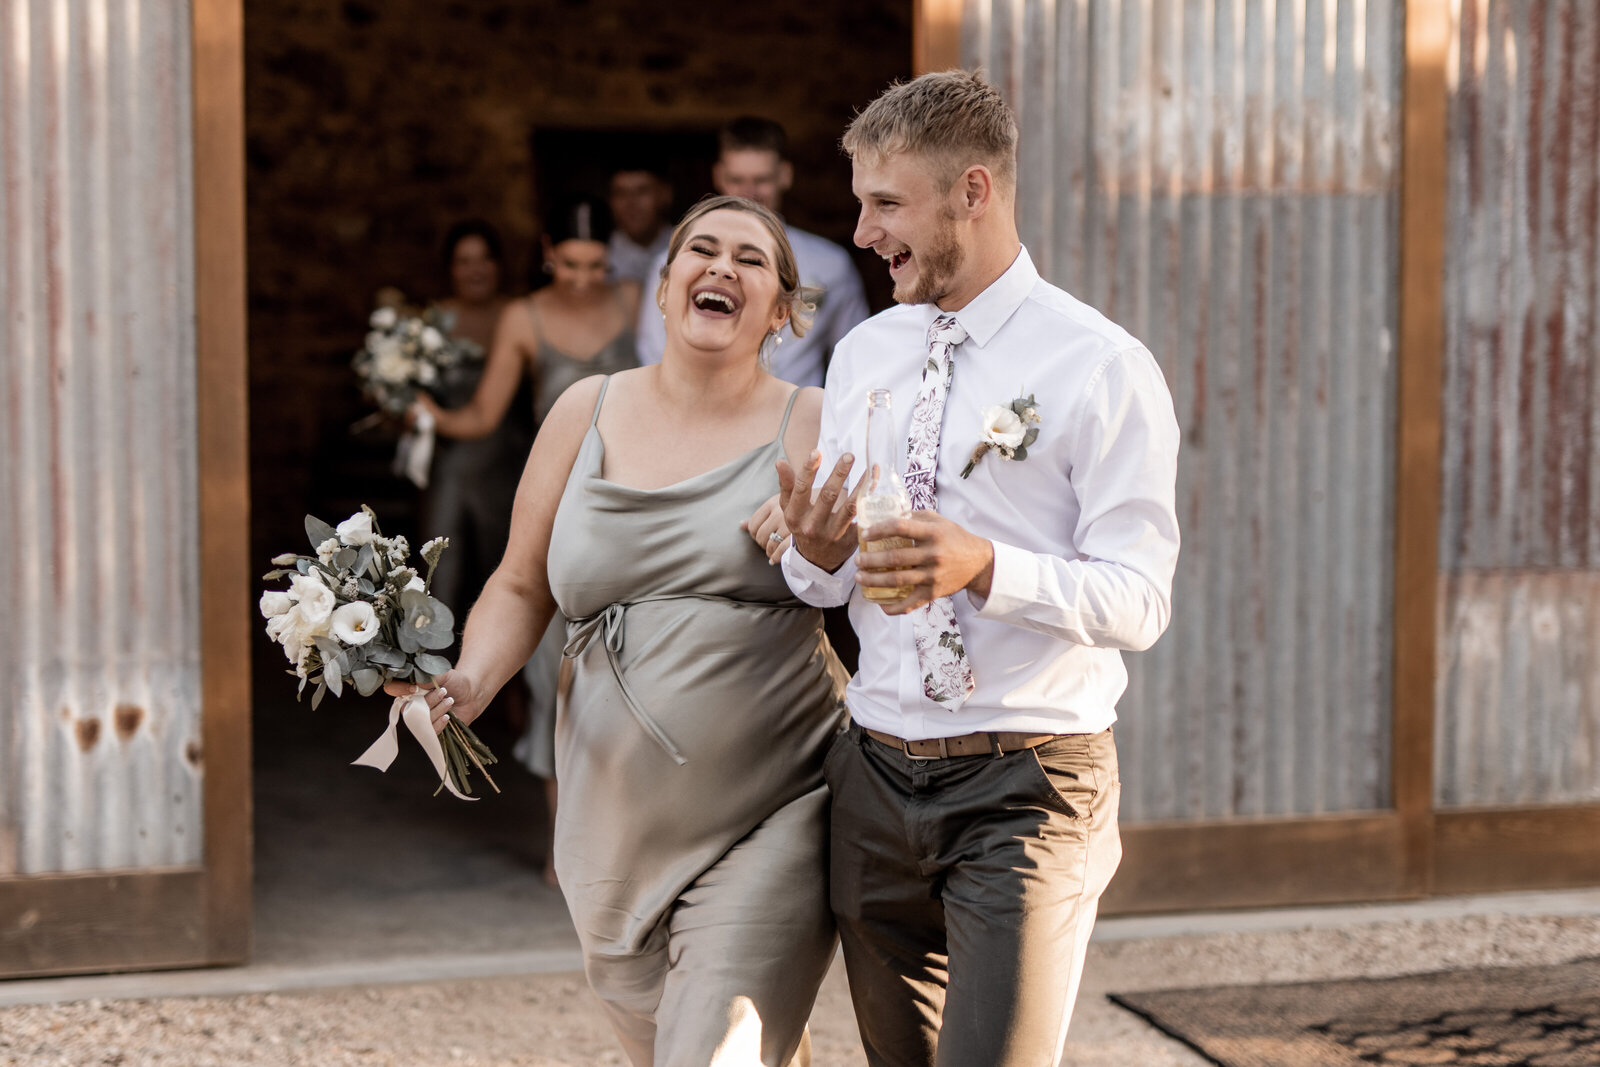 Caitlin-Reece-Rexvil-Photography-Adelaide-Wedding-Photographer-510